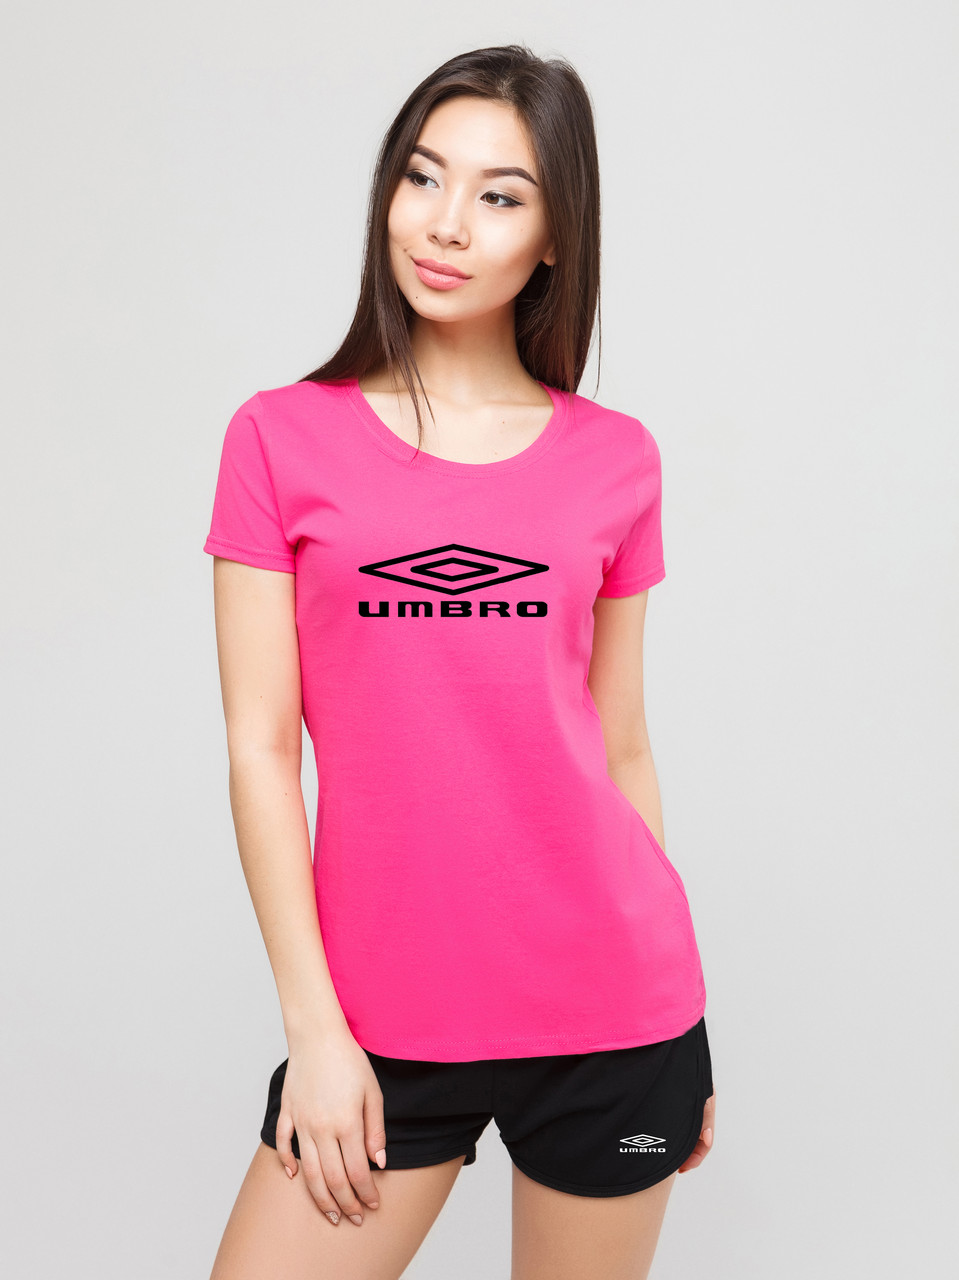 Жіночий комплект Umbro футболка + шорти, Умбро